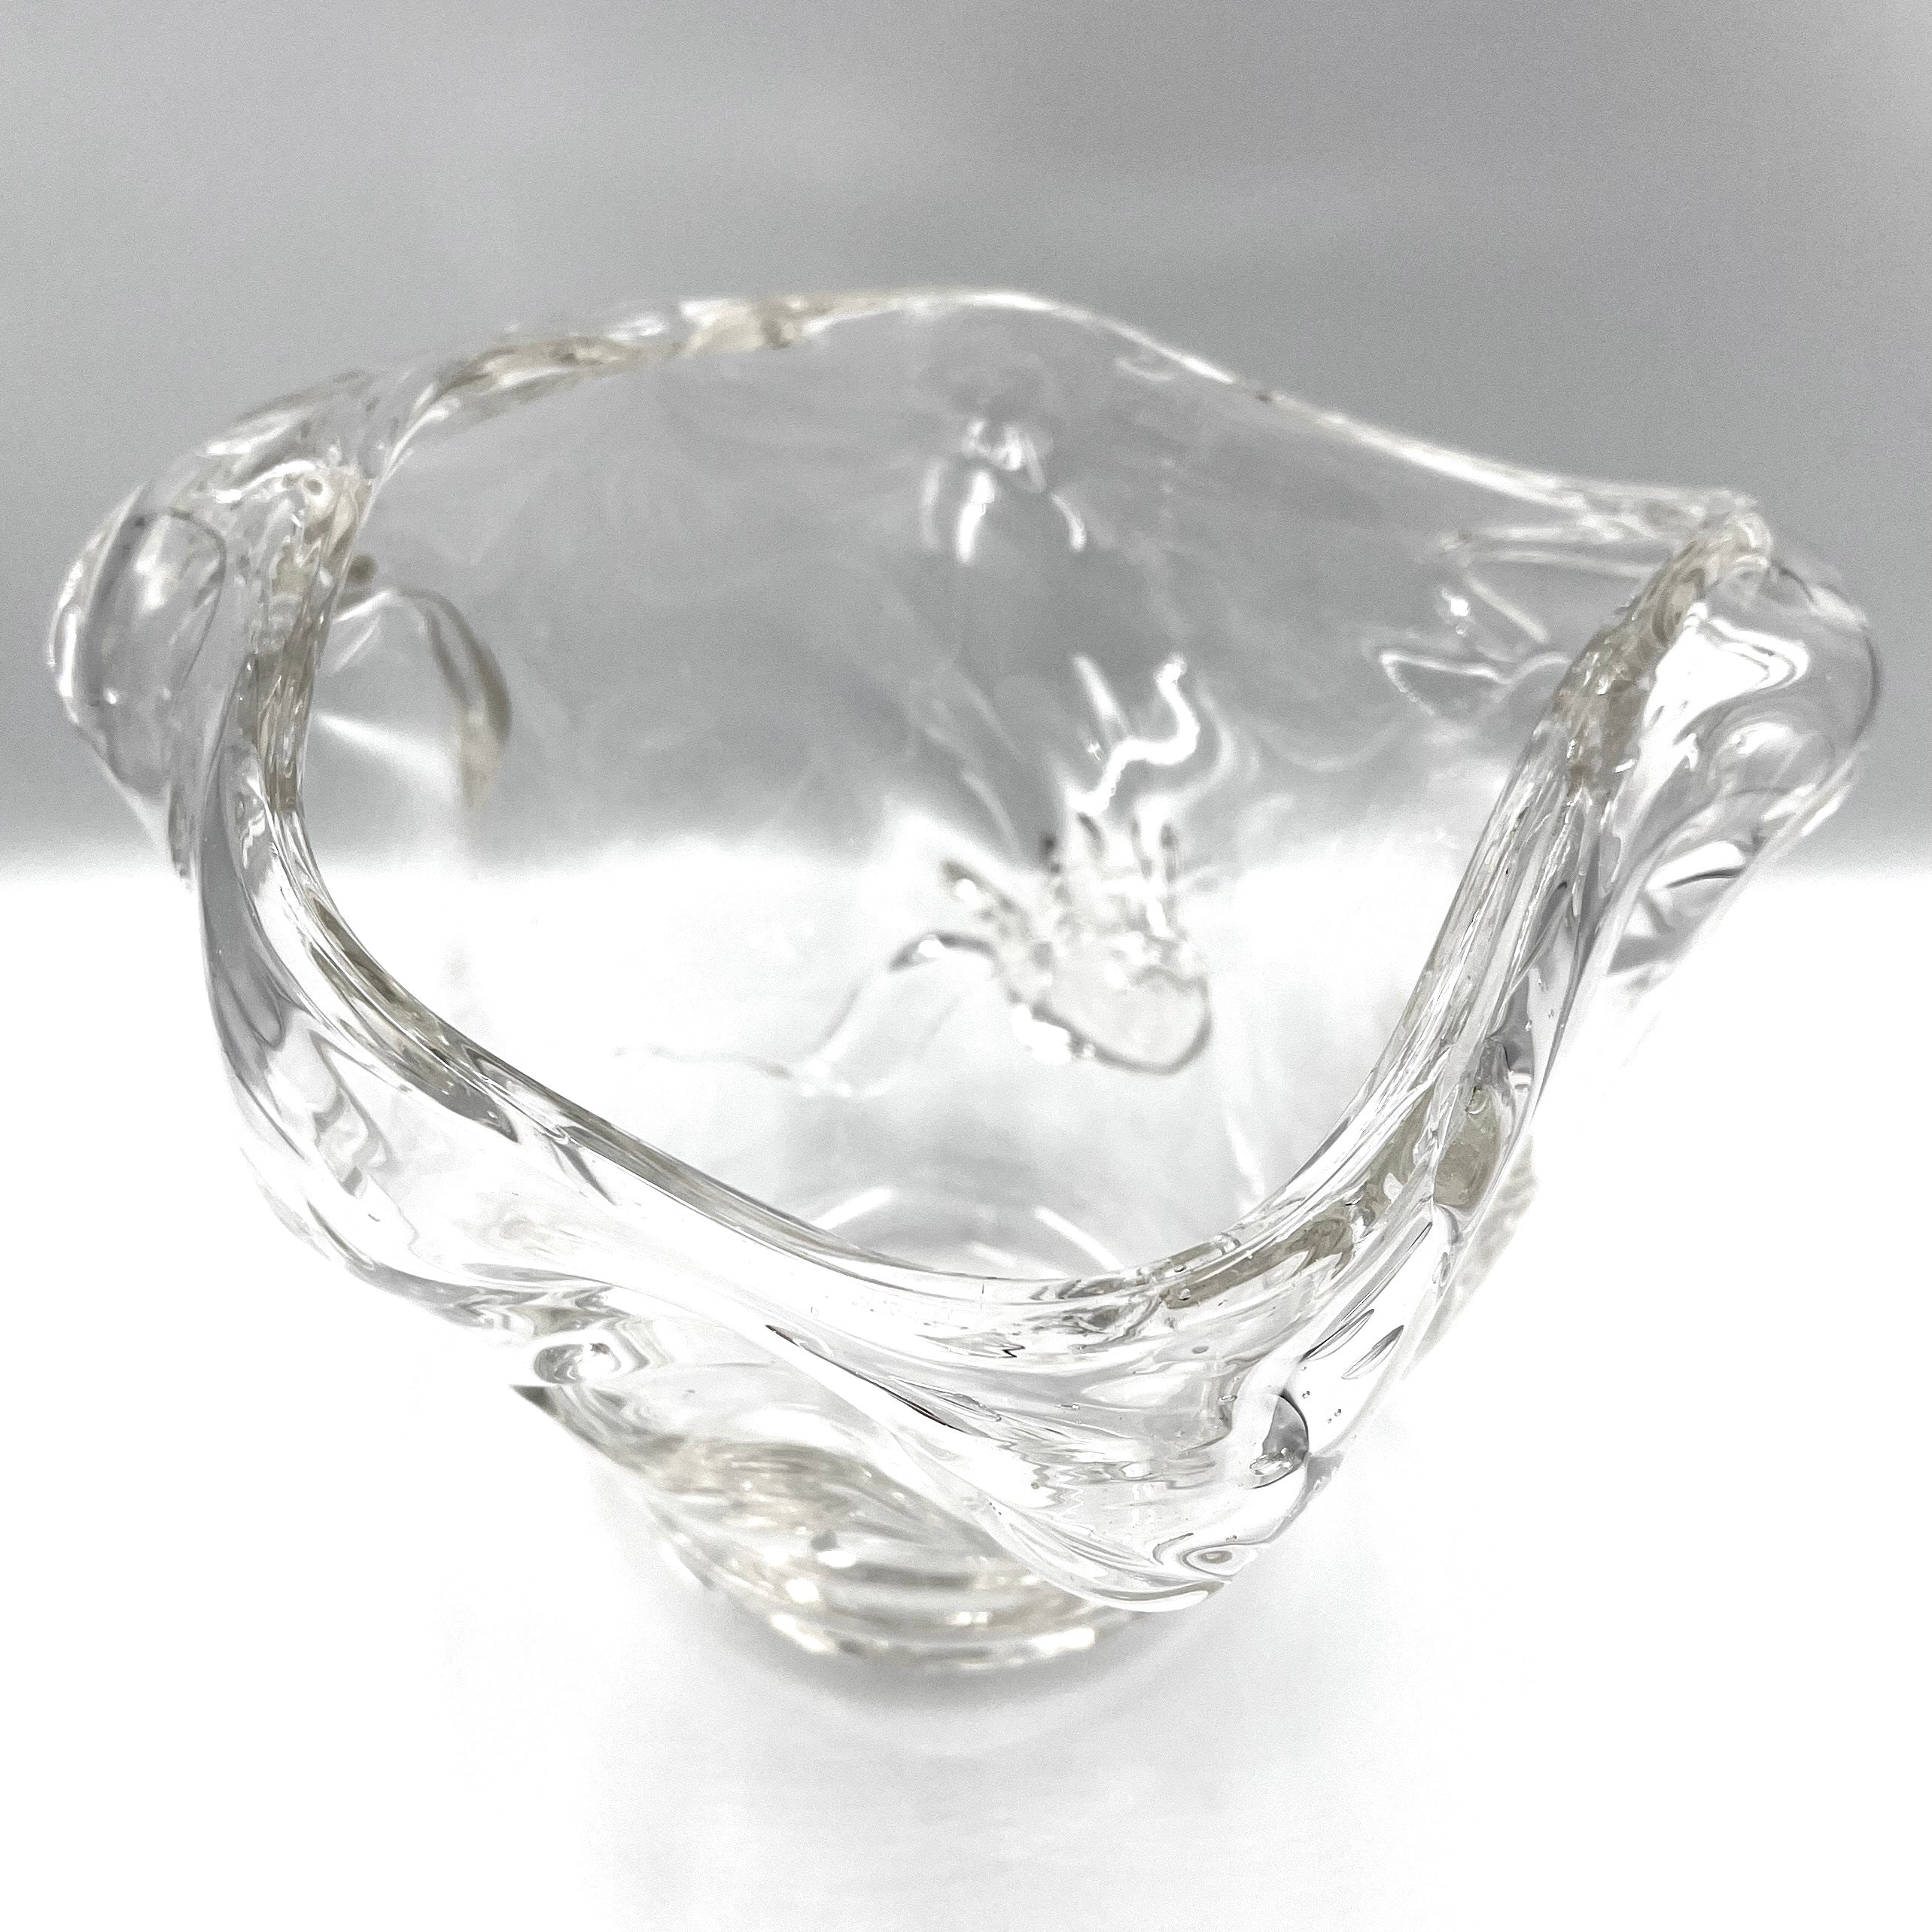 Small Handblown Glass Bowl –